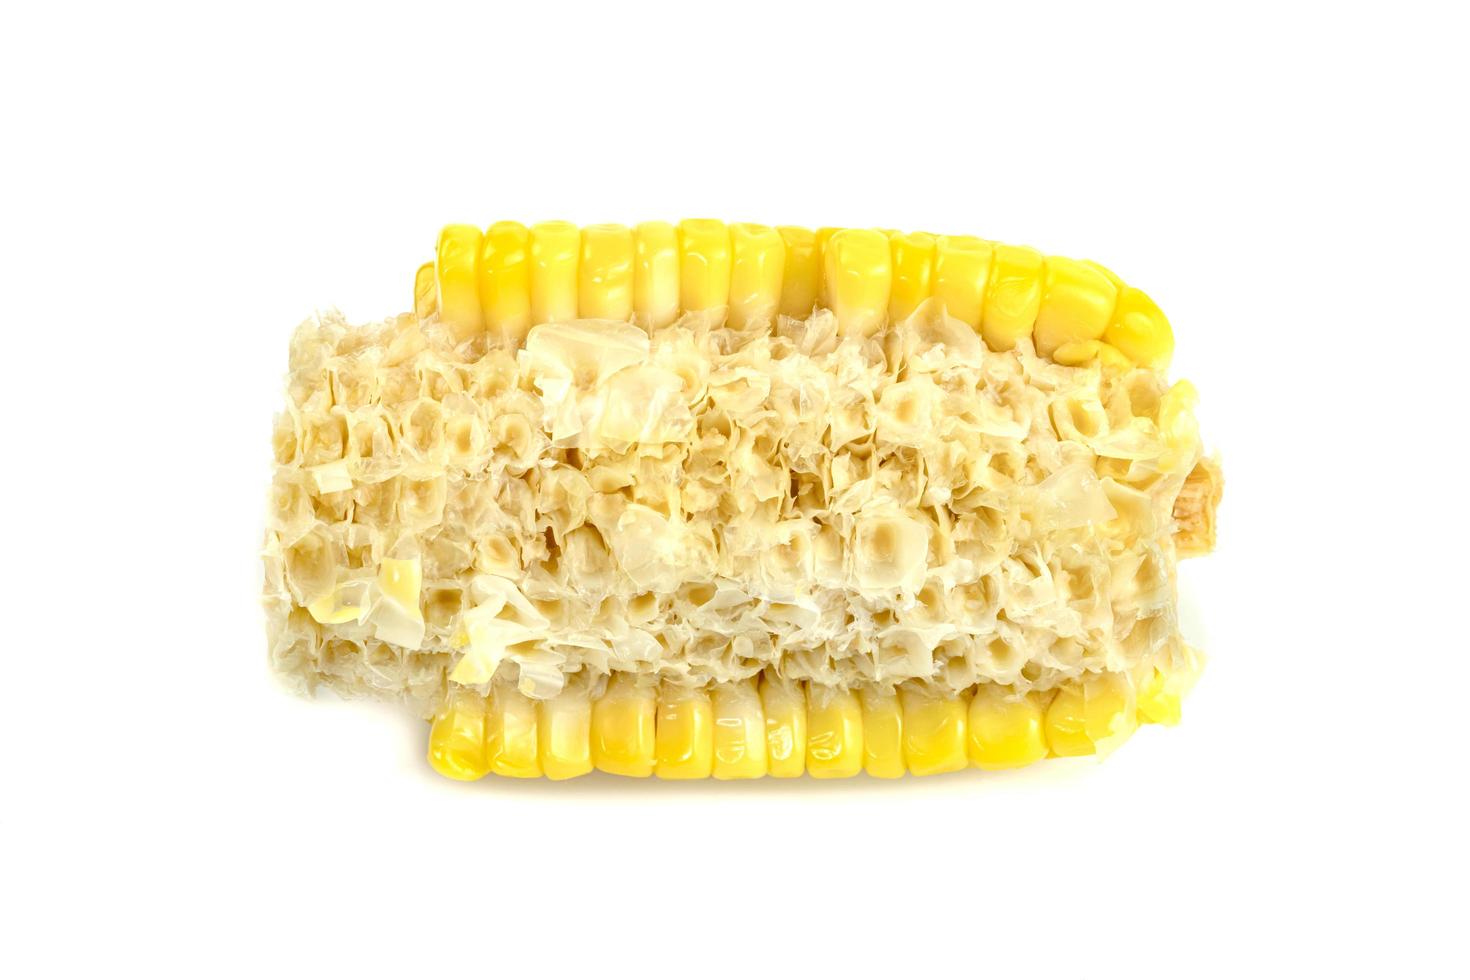 biten majs isolerad på vit bakgrund foto